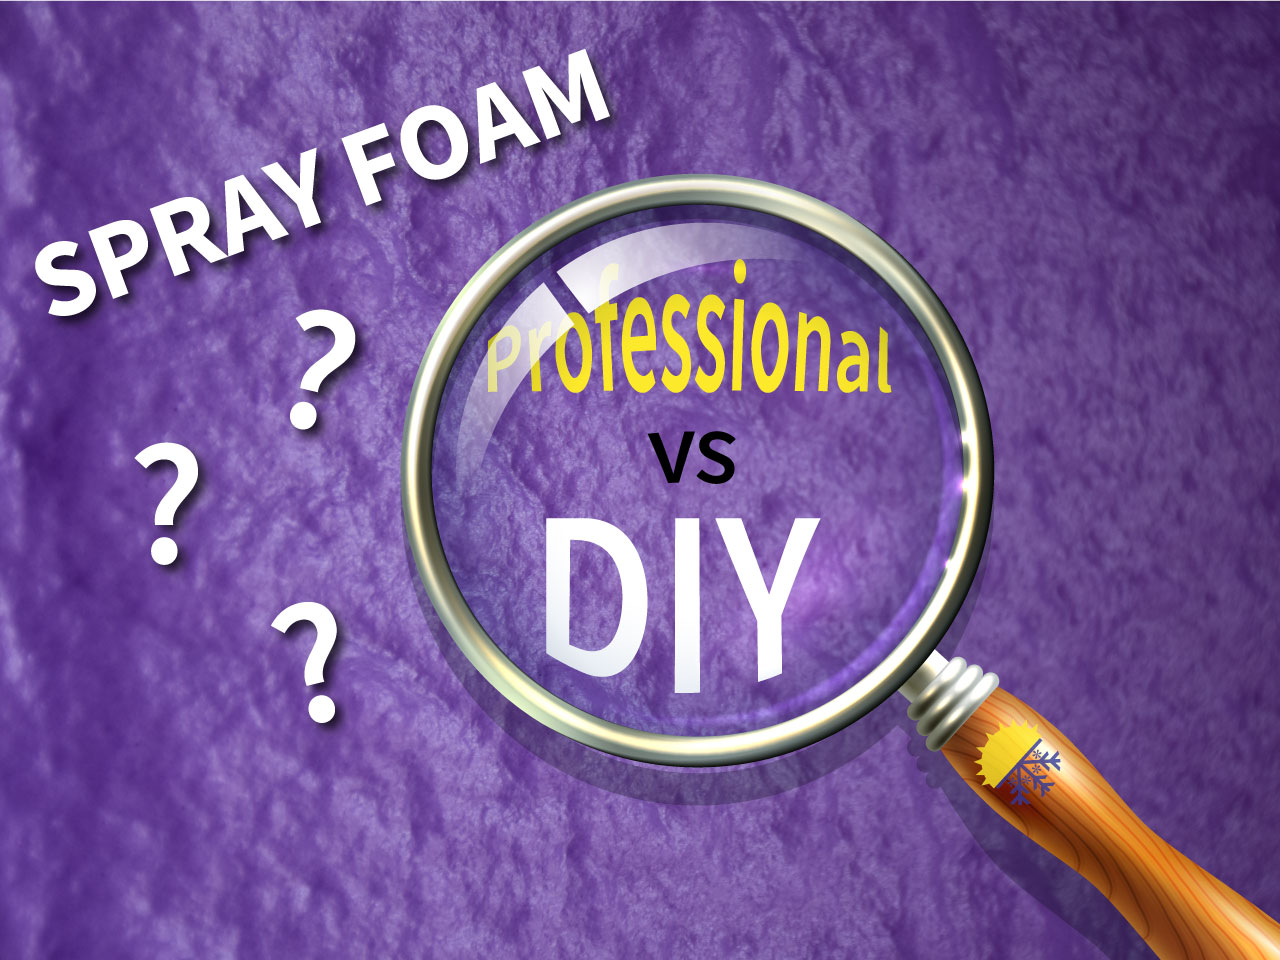 Sprayfoam - Professional vs. DIY